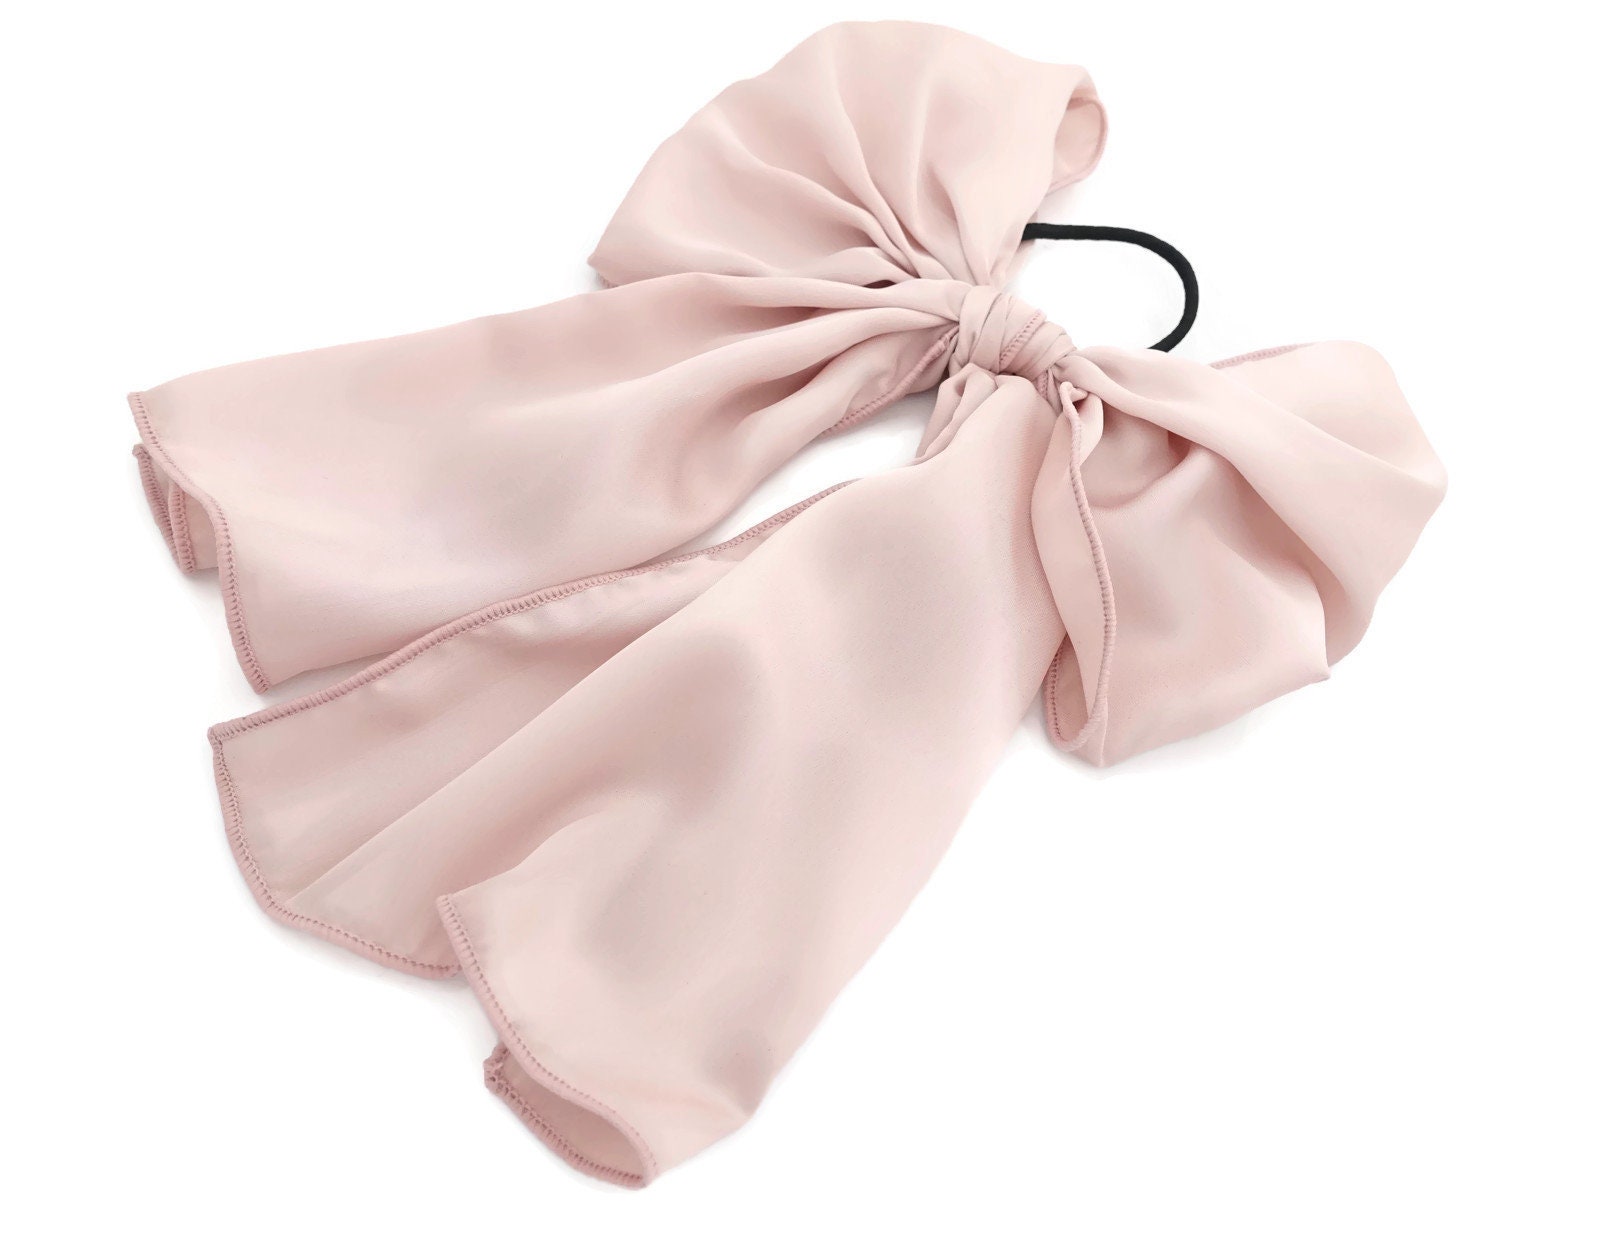 veryshine.com Ponytail holders Baby pink satin big glam bow hair elastic large stylish scarf knot tie bow ponytail holder